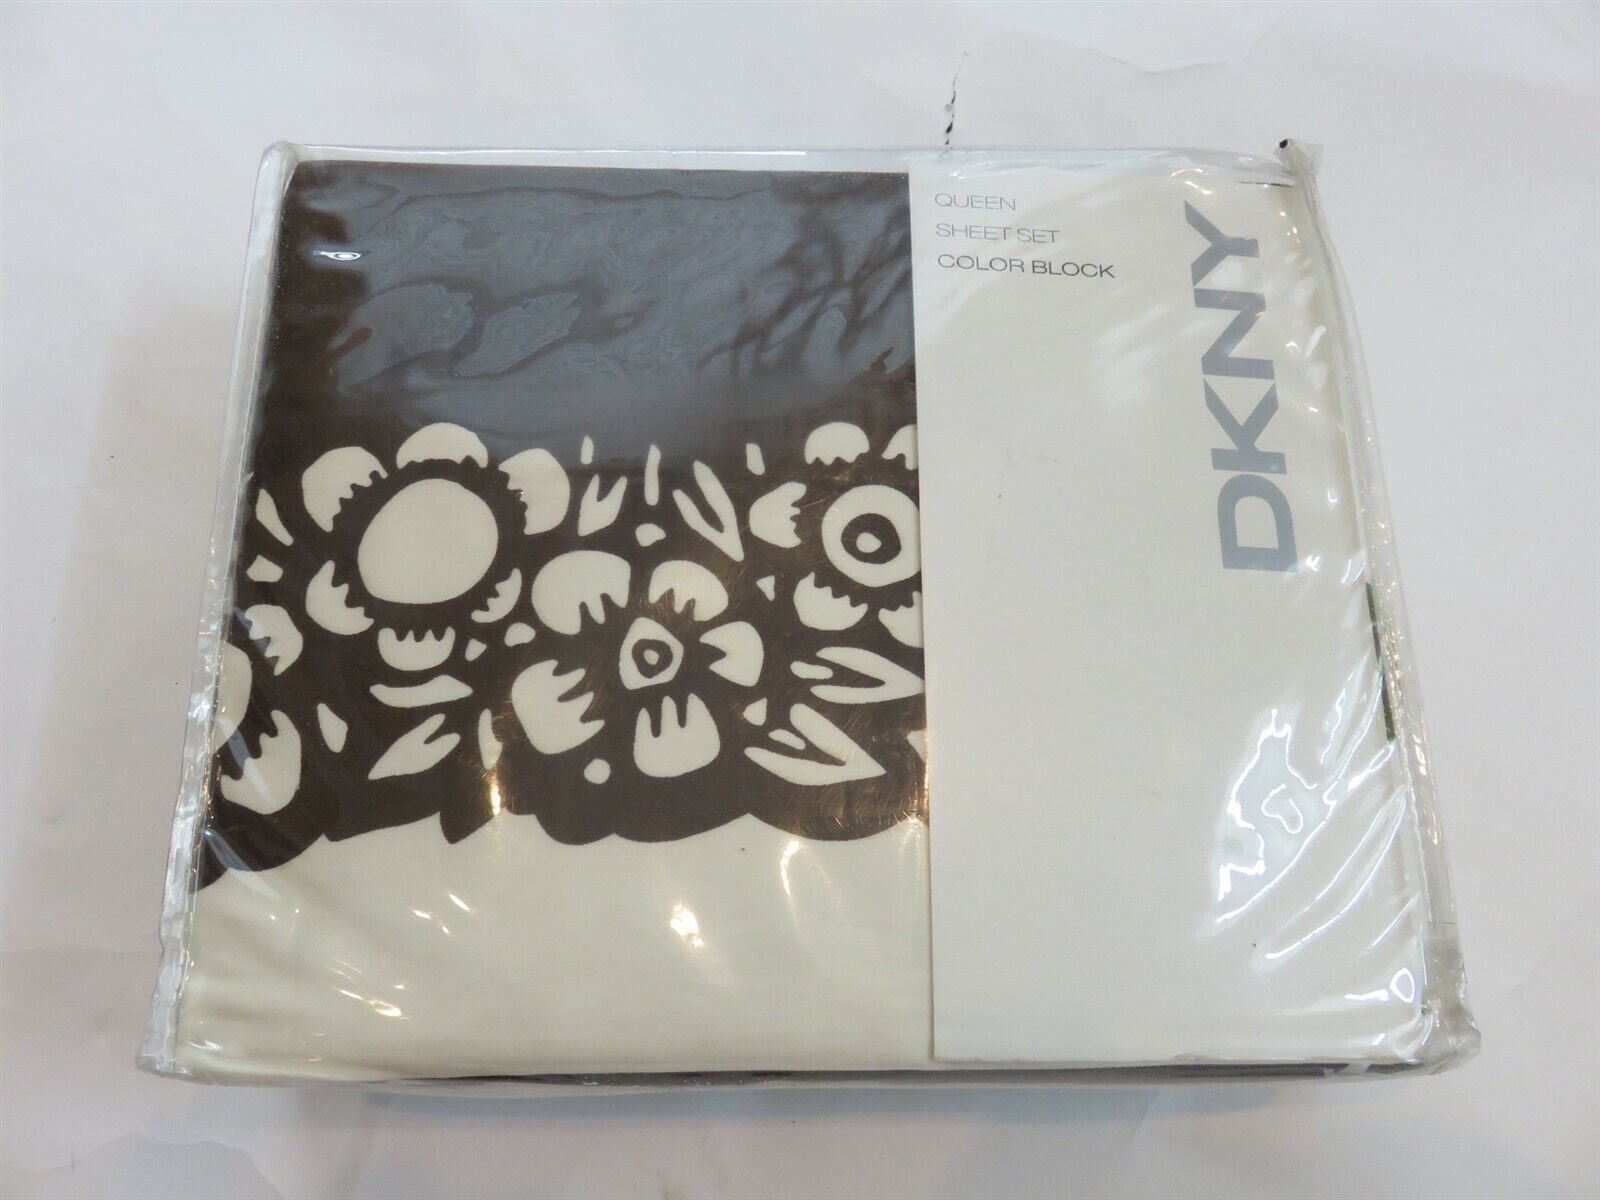 DKNY Color Block Brown 4P Queen Sheet Set - $121.20